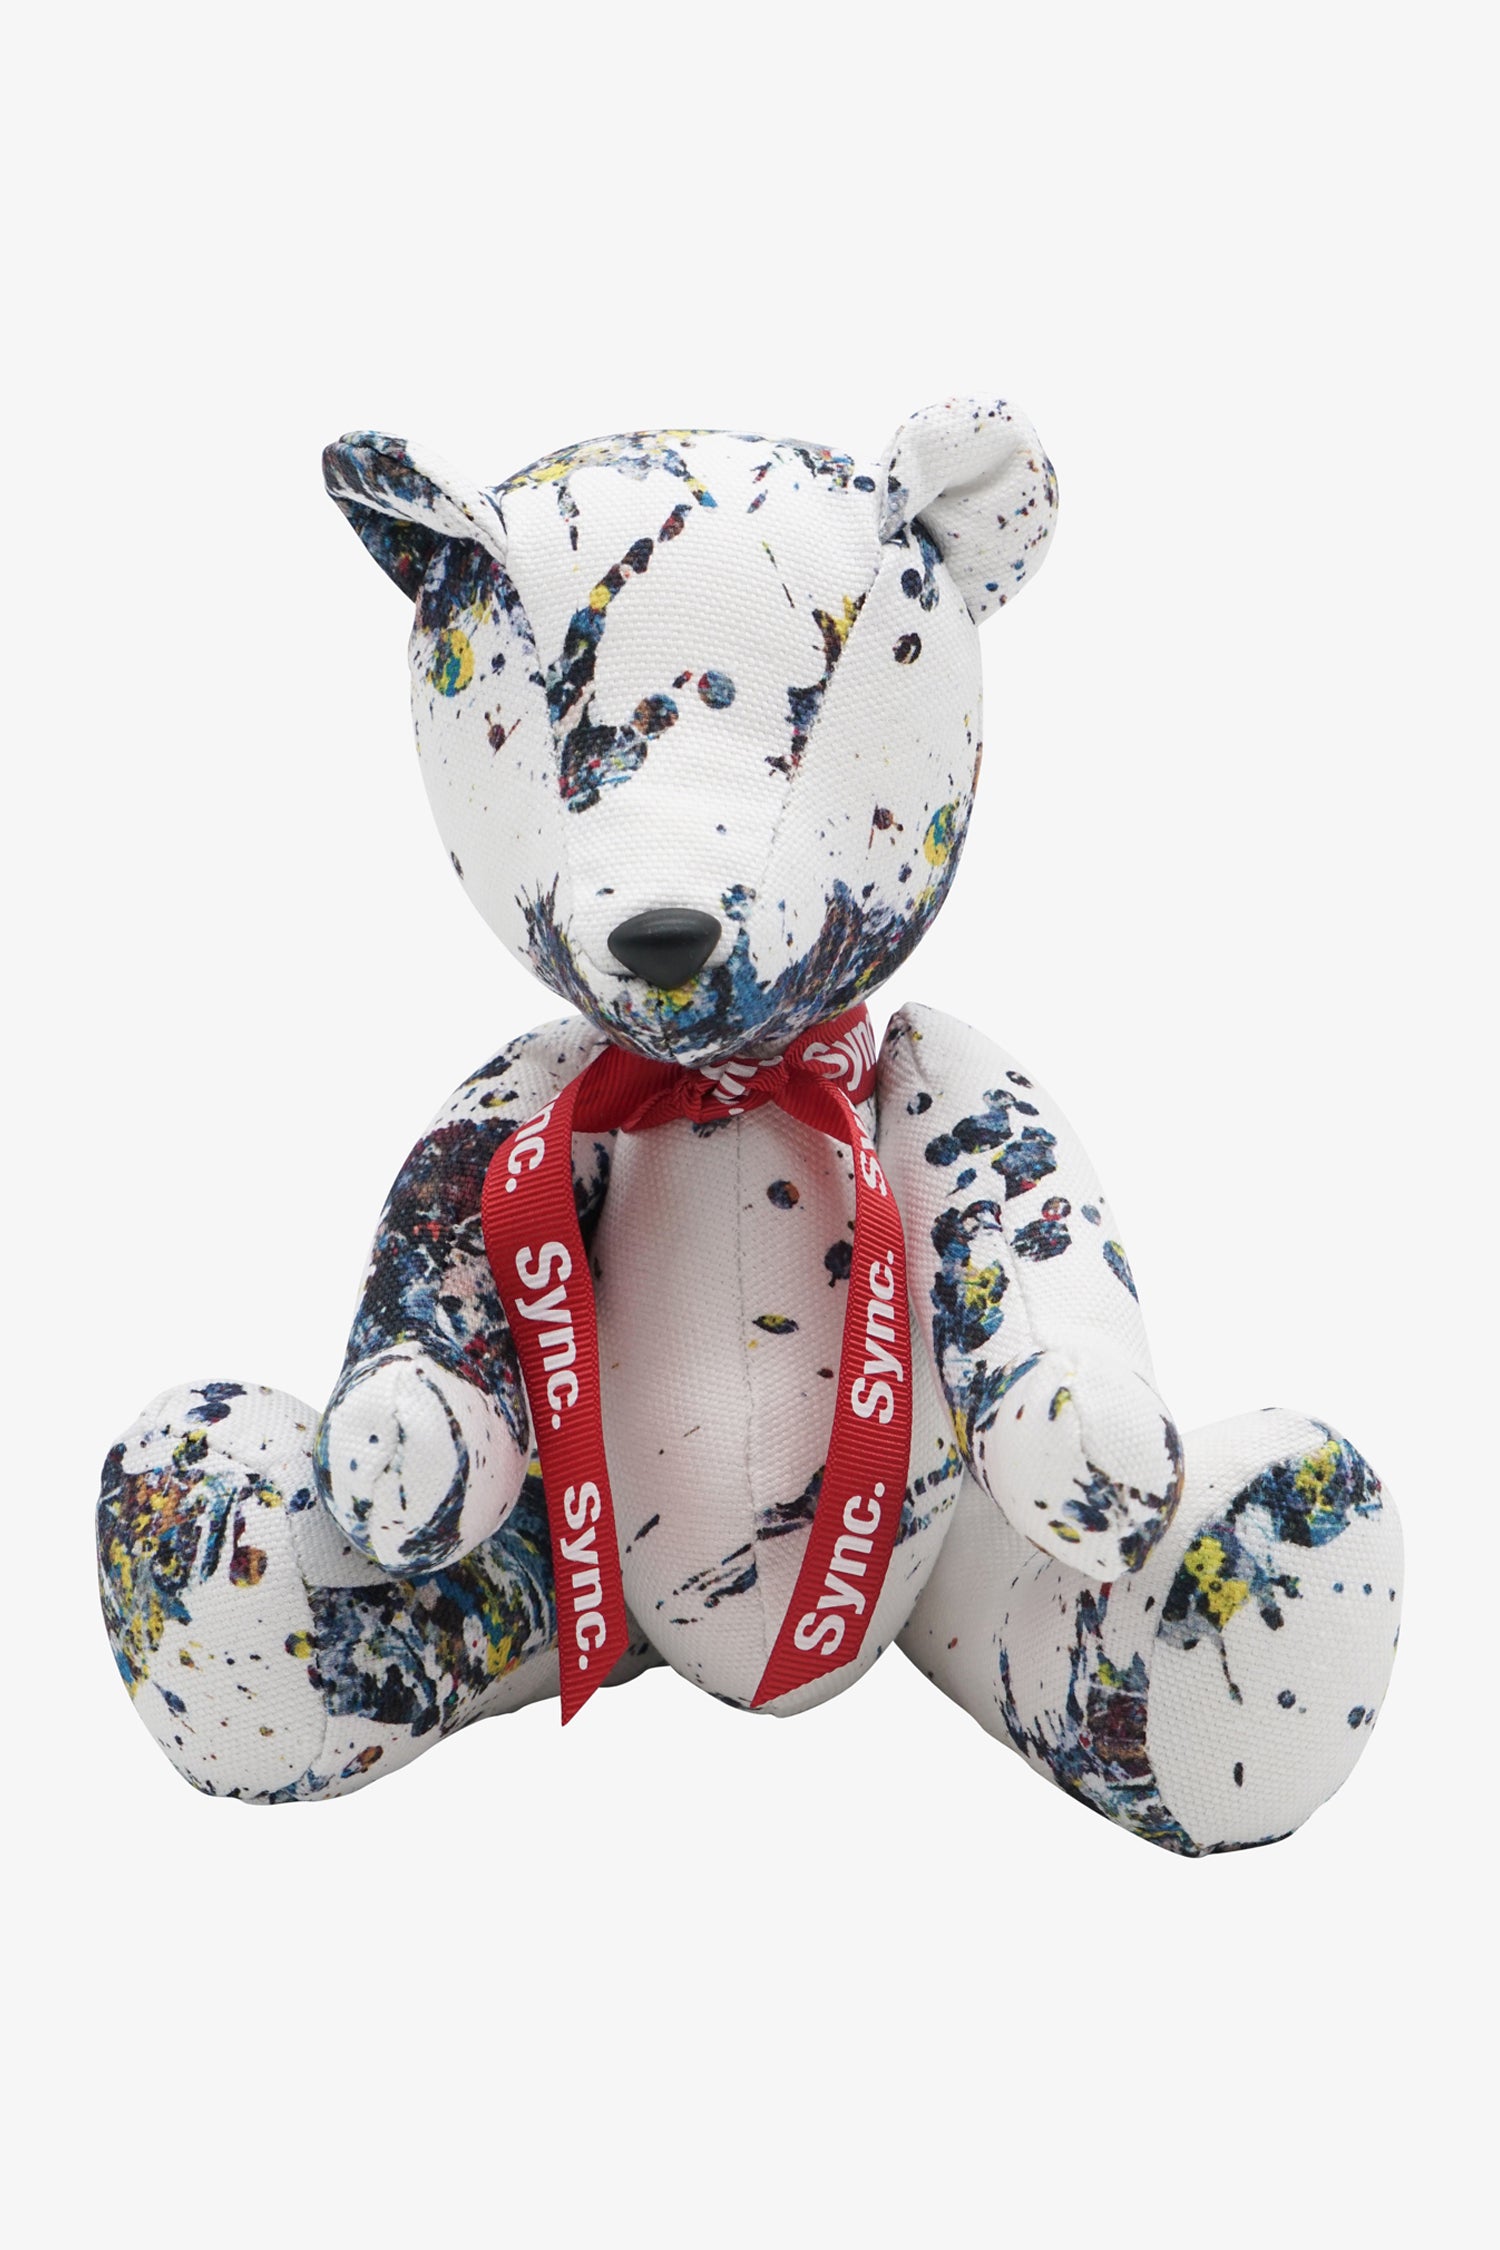 Selectshop FRAME - SYNC Jackson Pollock Studio "Splash" Teddy Bear Lifestyle Dubai